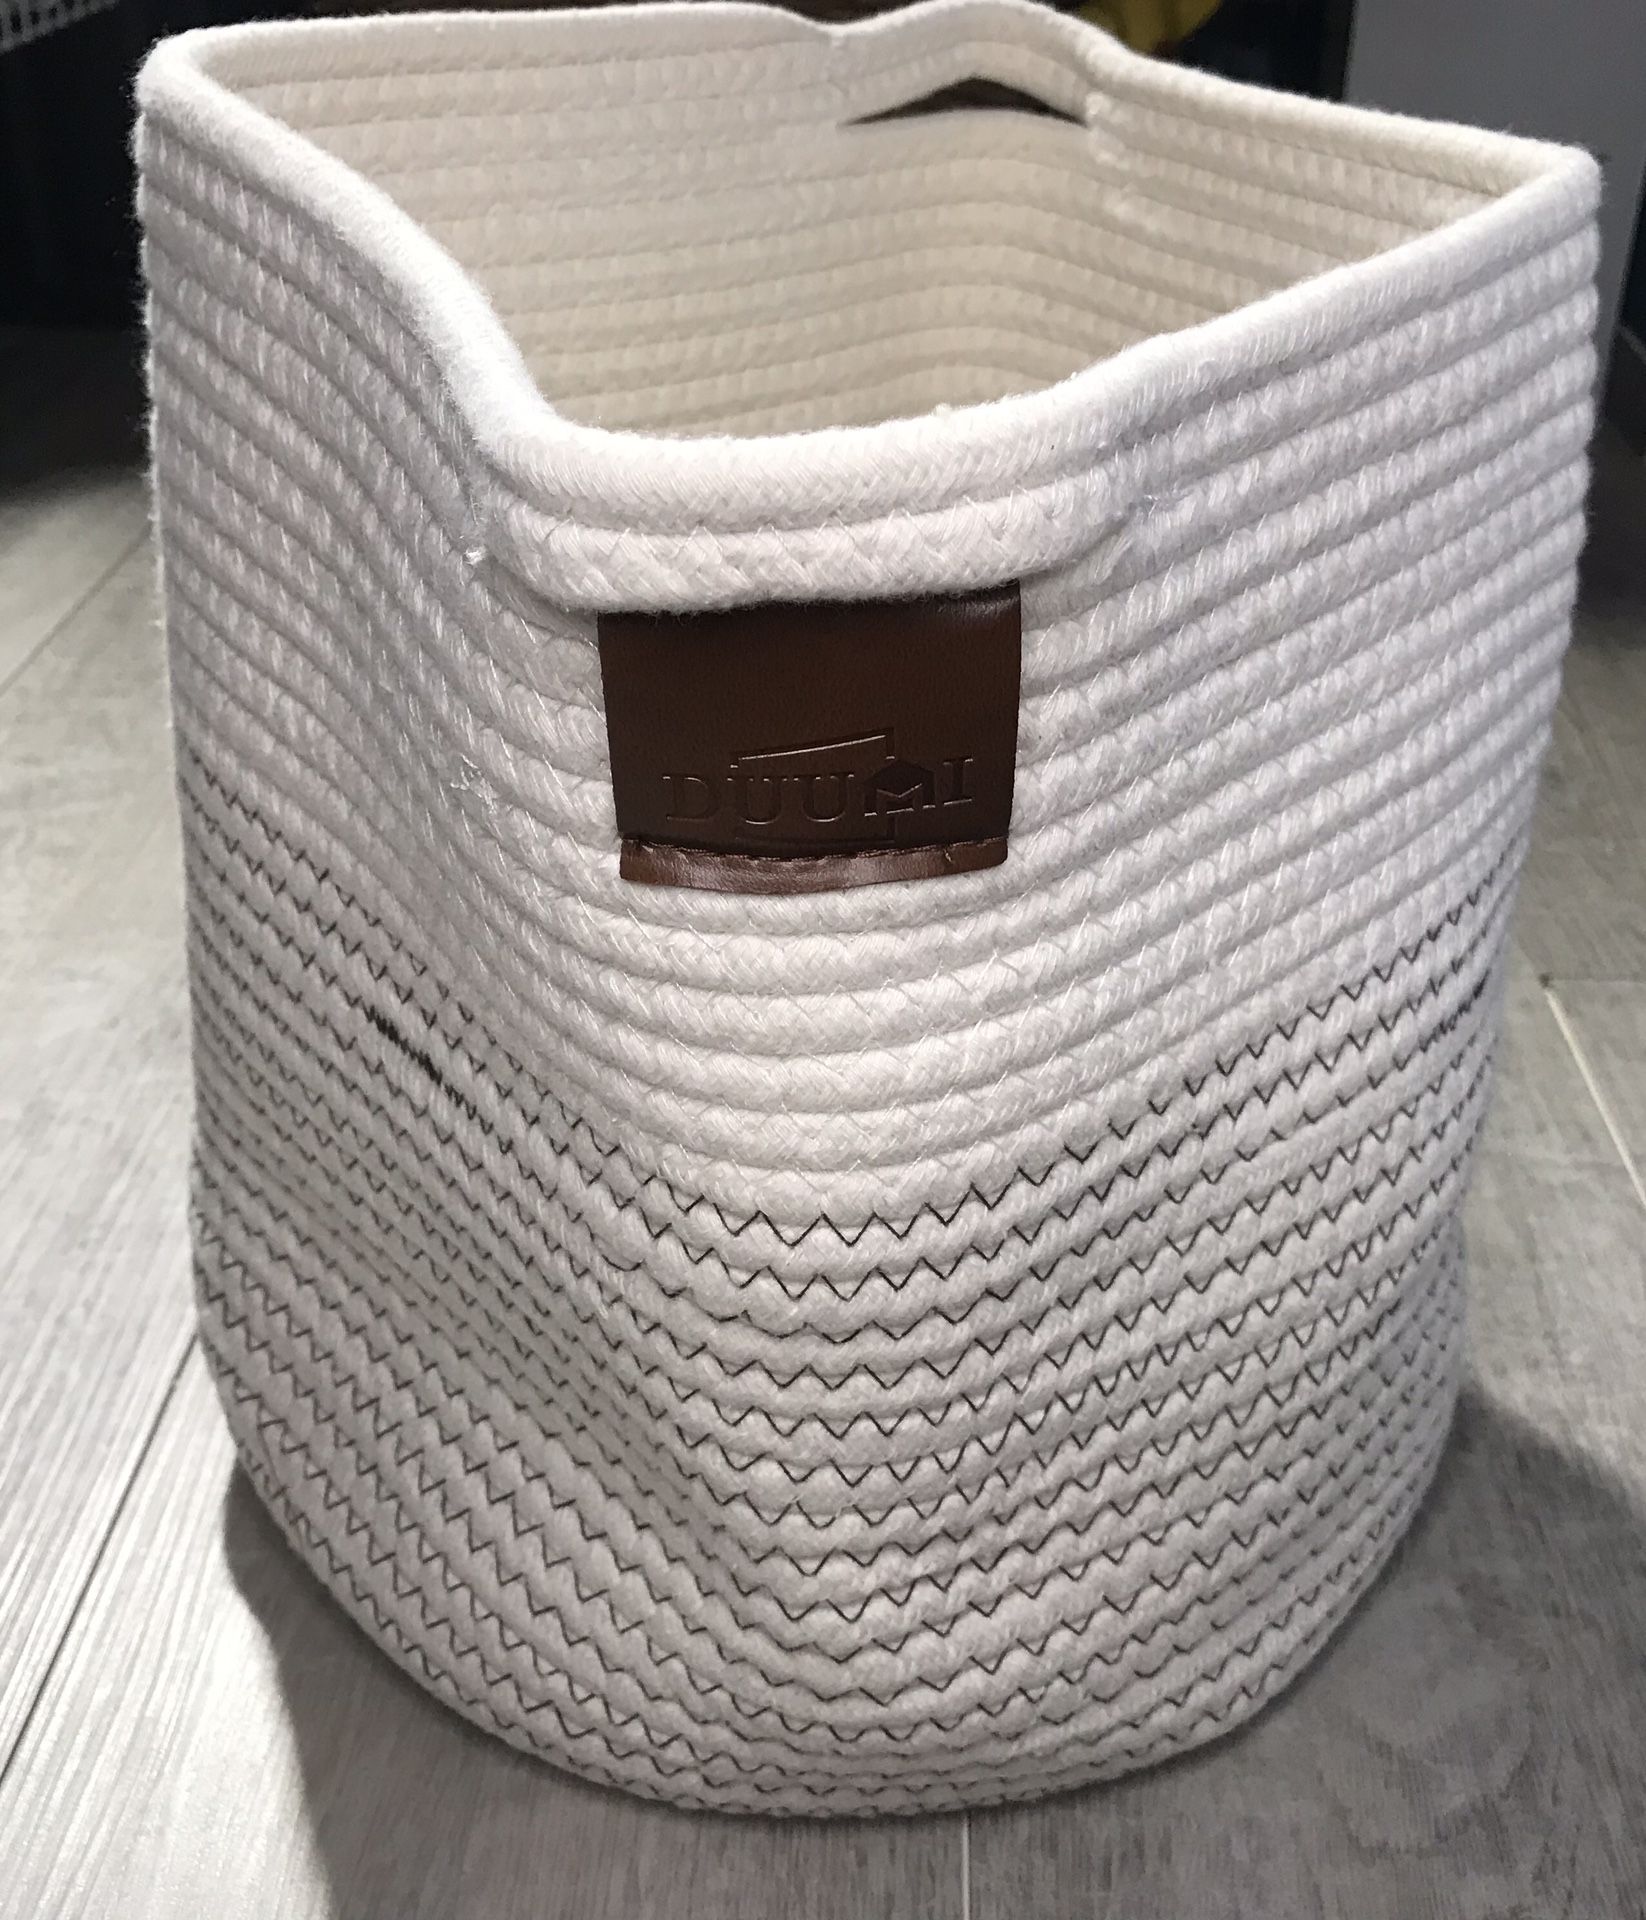 Small Storage Basket - Cute Cotton Rope Basket